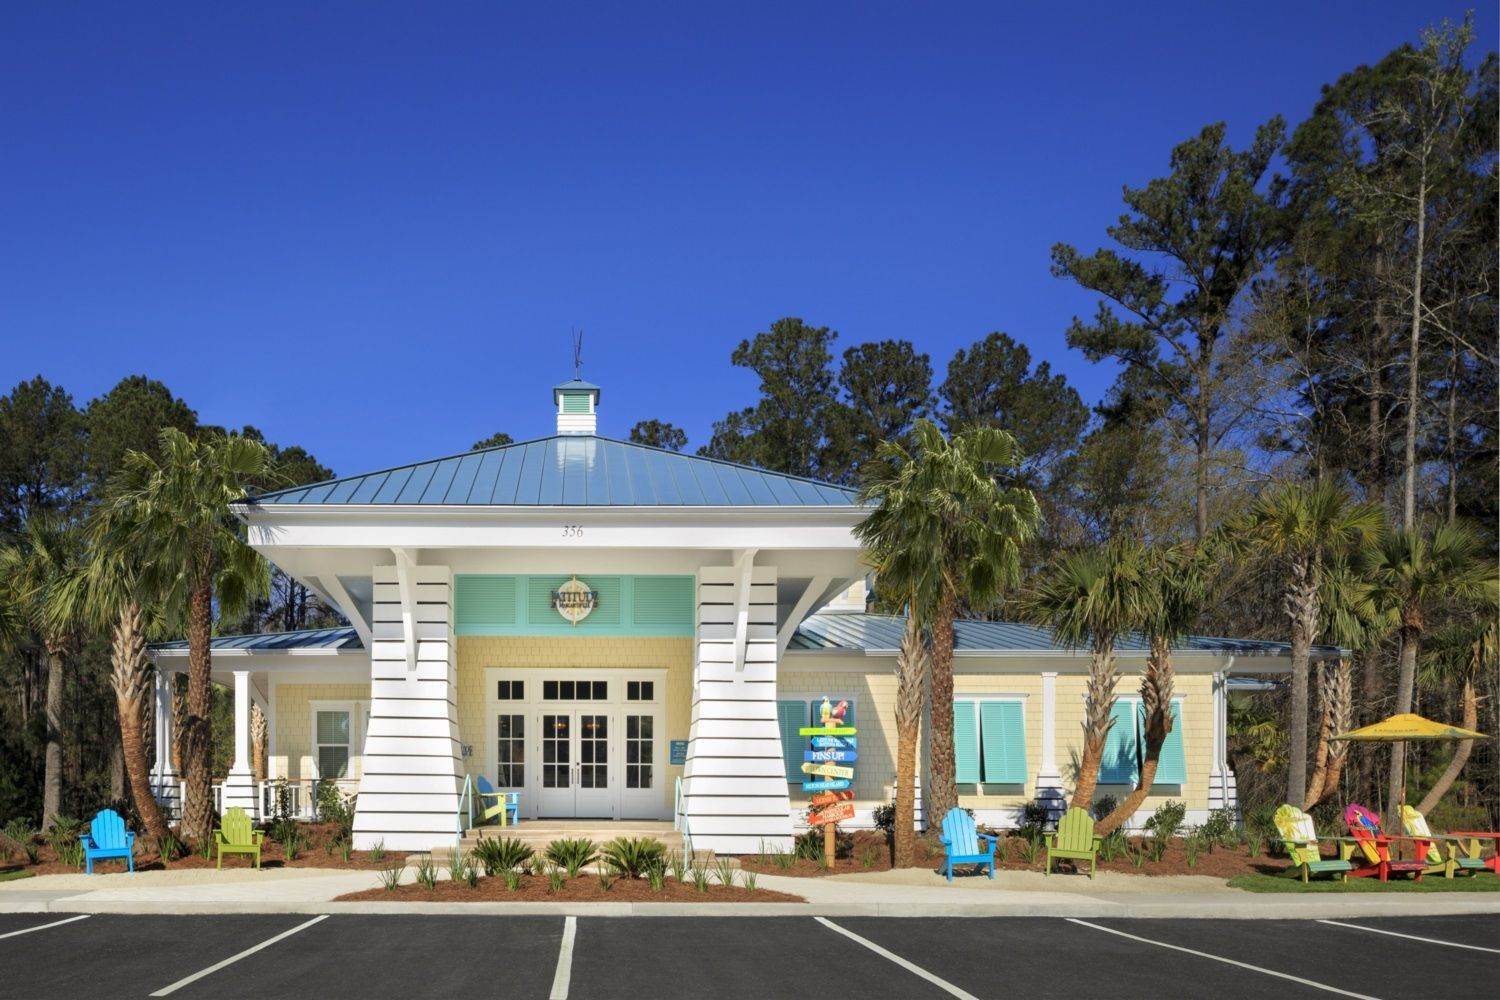 45. Latitude Margaritaville Hilton Head, South Carolina建于 356 Latitude Boulevard, Hardeeville, SC 29927